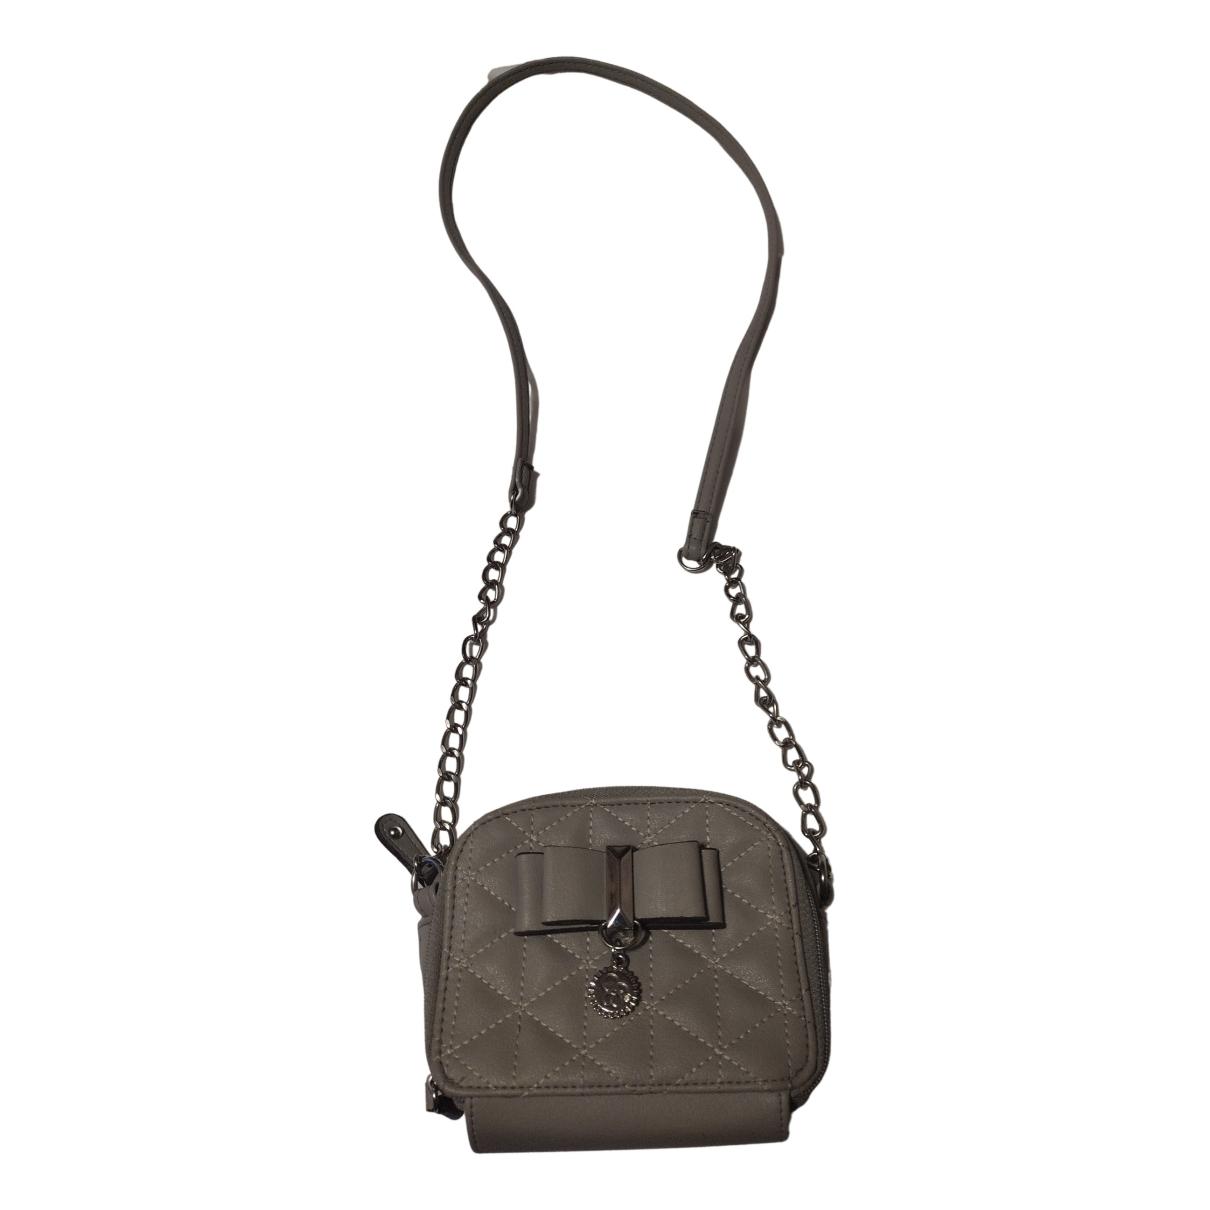 JESSICA SIMPSON Handbags for Women - Vestiaire Collective